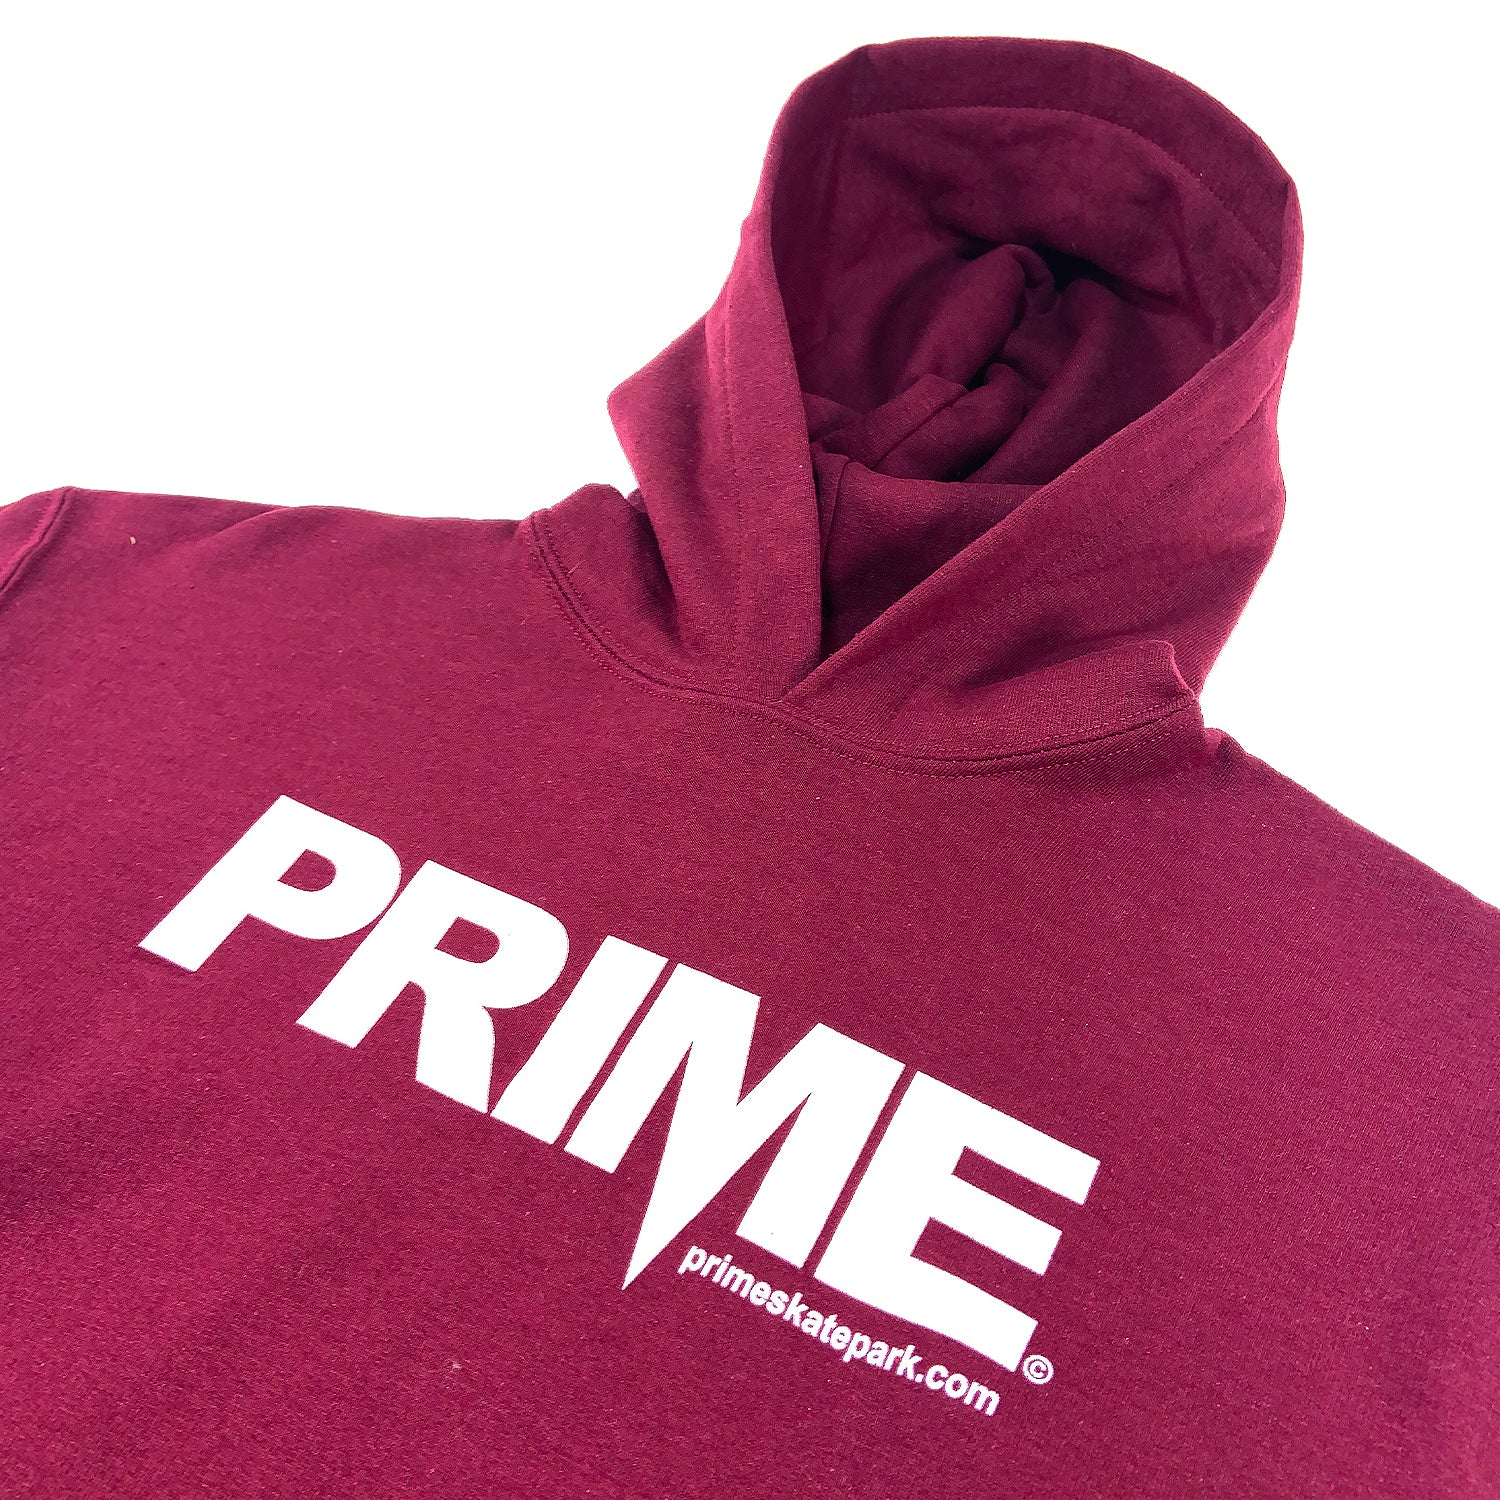 Prime Delux OG Logo Kids Hooded Sweat - Maroon / White - Prime Delux Store